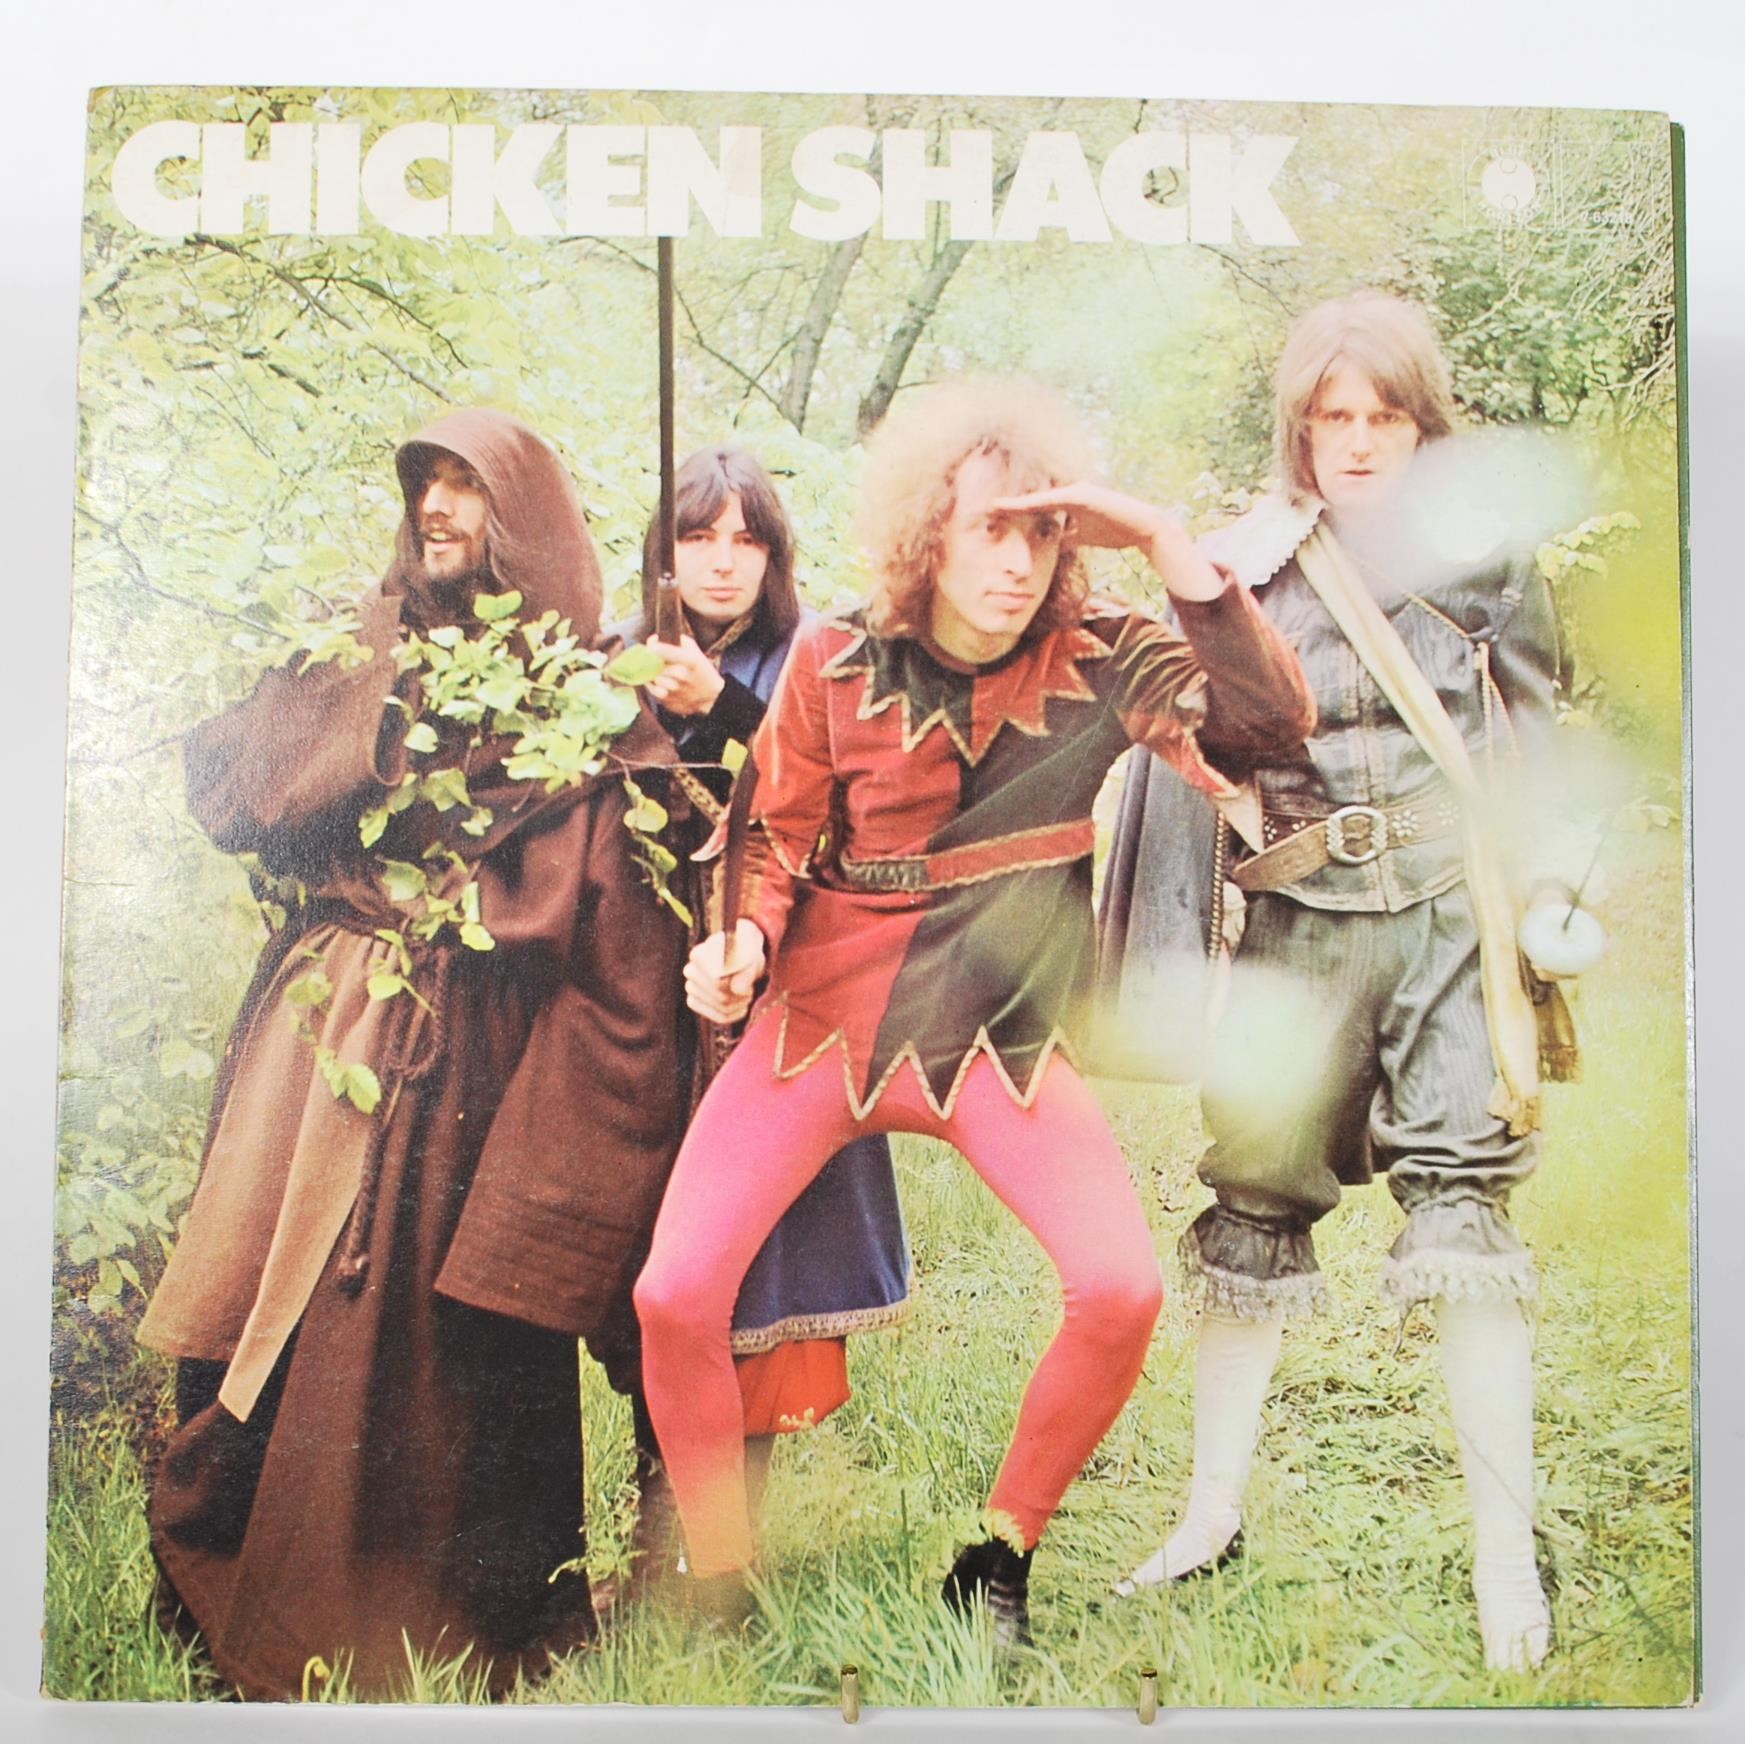 Vinyl long play LP record album by Chicken Shack – 100 Ton Chicken – Original Blue Horizon 1st U.